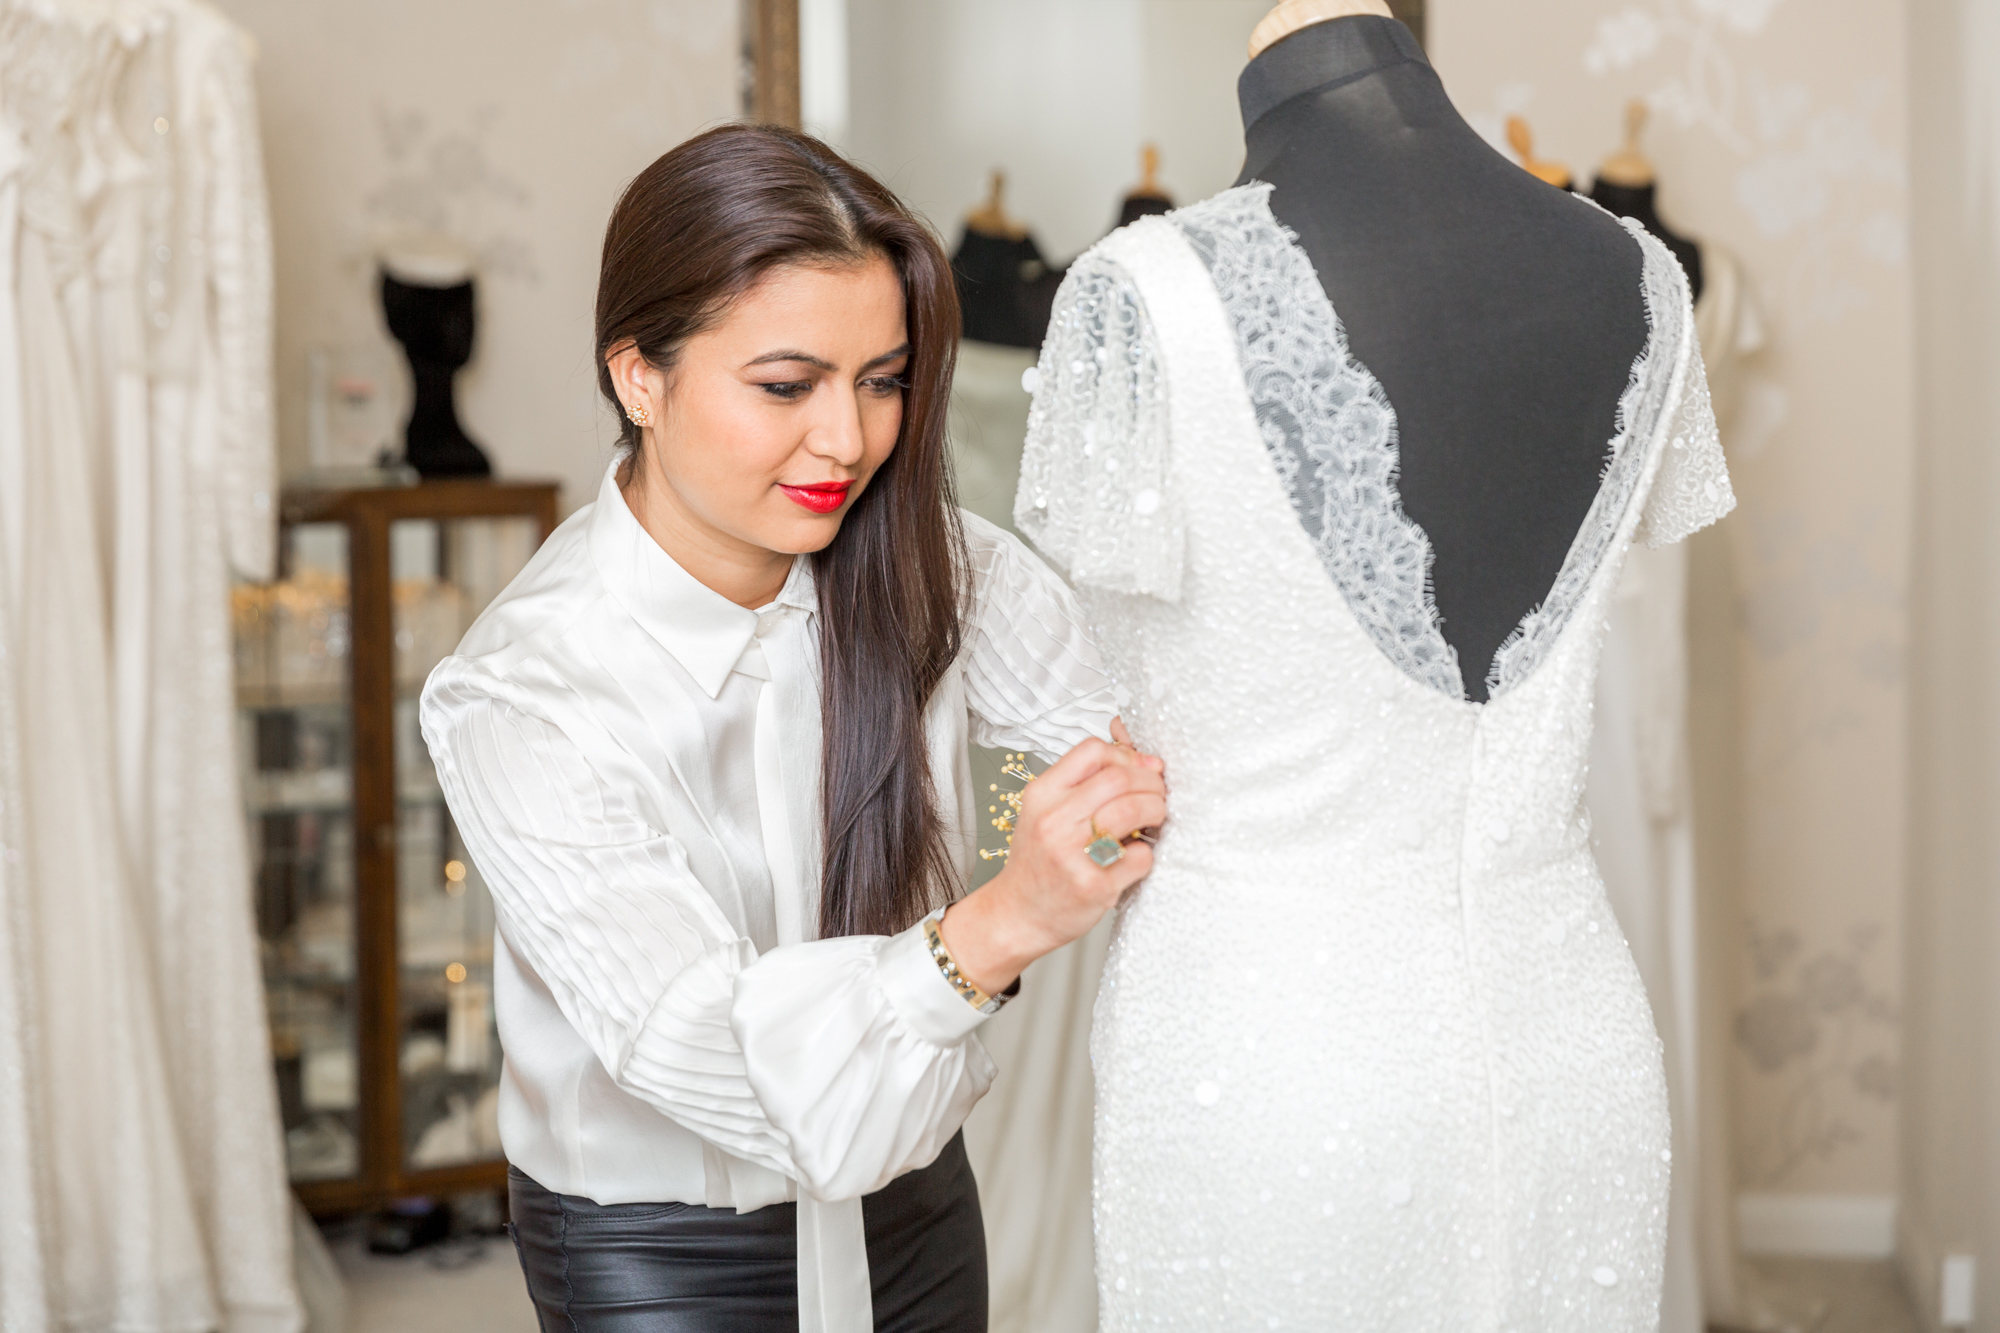 sanyukta shrestha ethical wedding dress designer